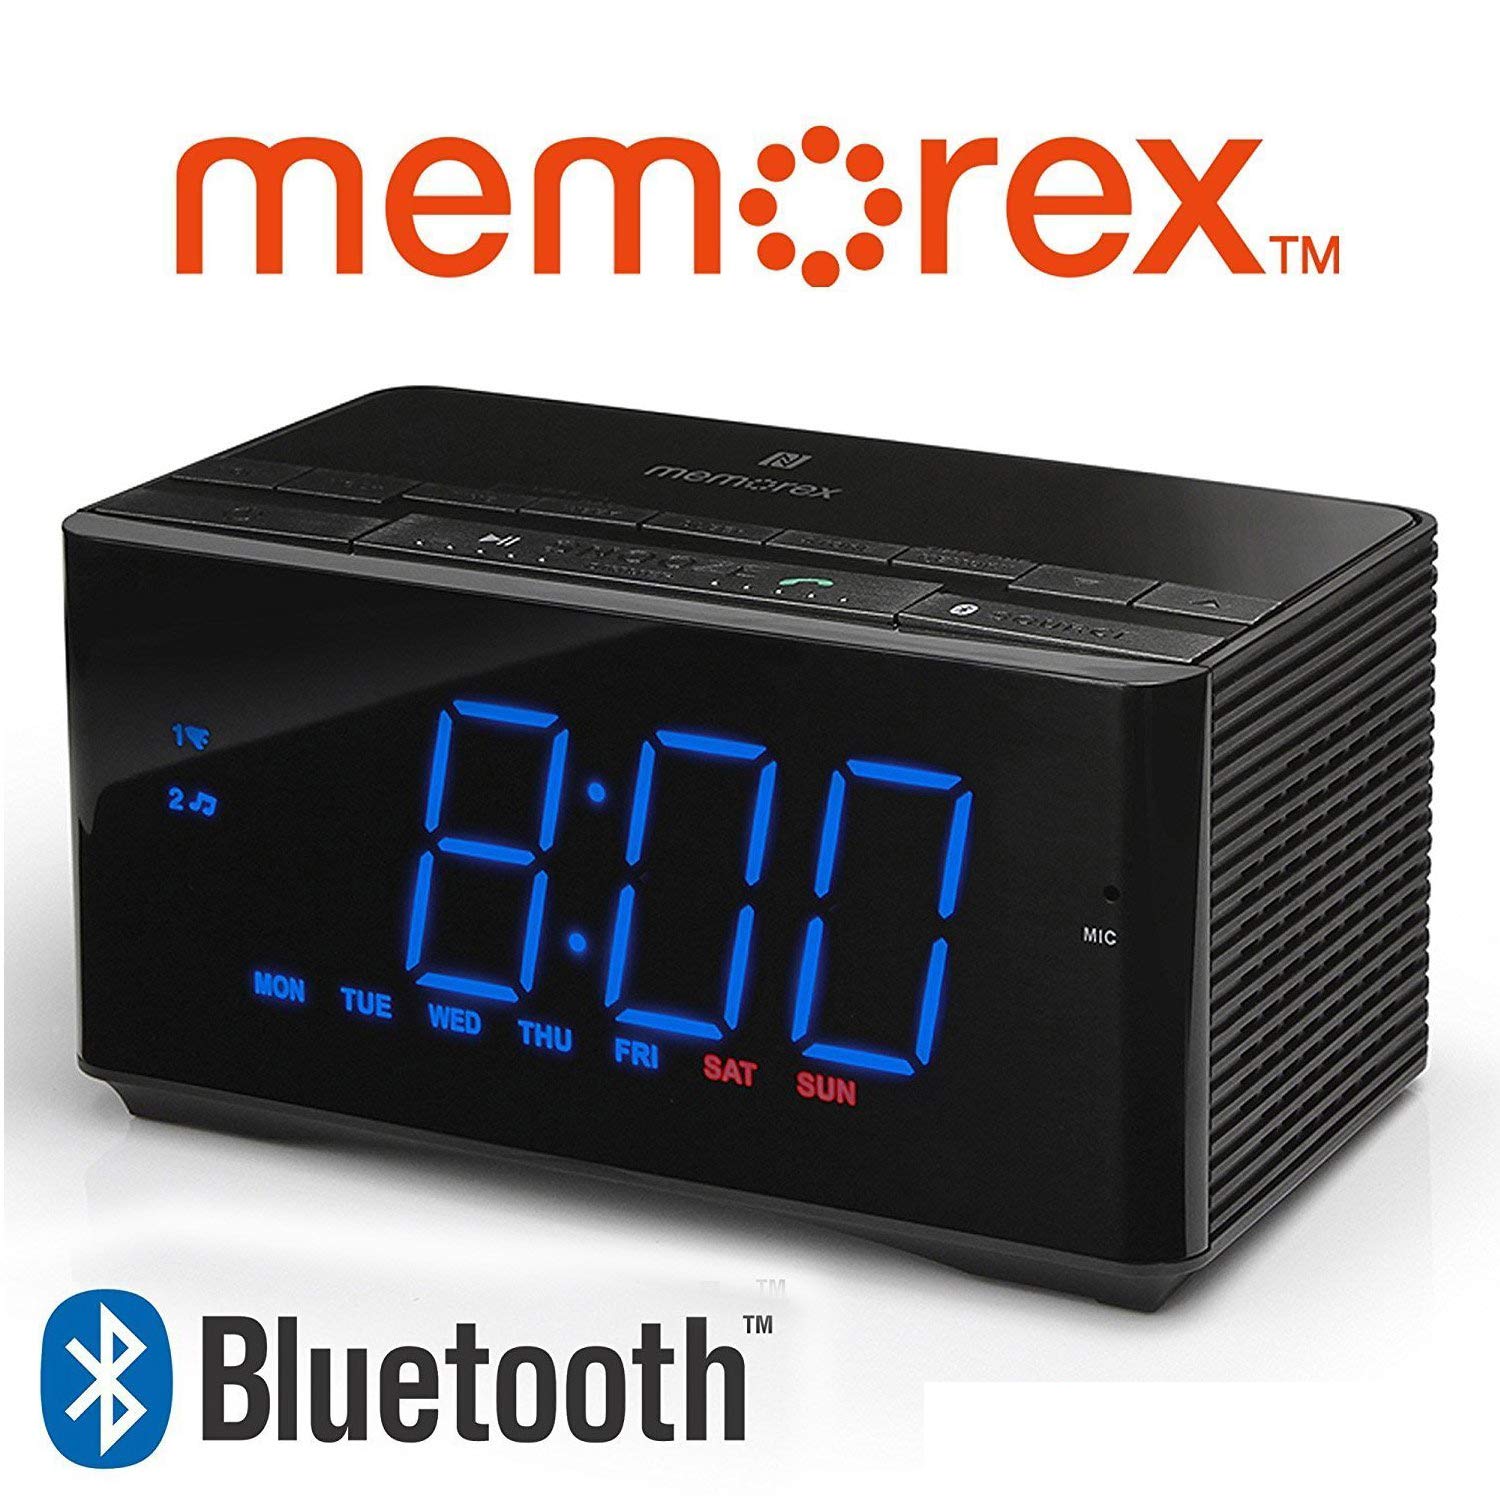 MEMOREX BLACK CLOCK RADIO AUDIO LED DISPLAY USB/ AM/ FM/ AUX/ BLUETOOTH